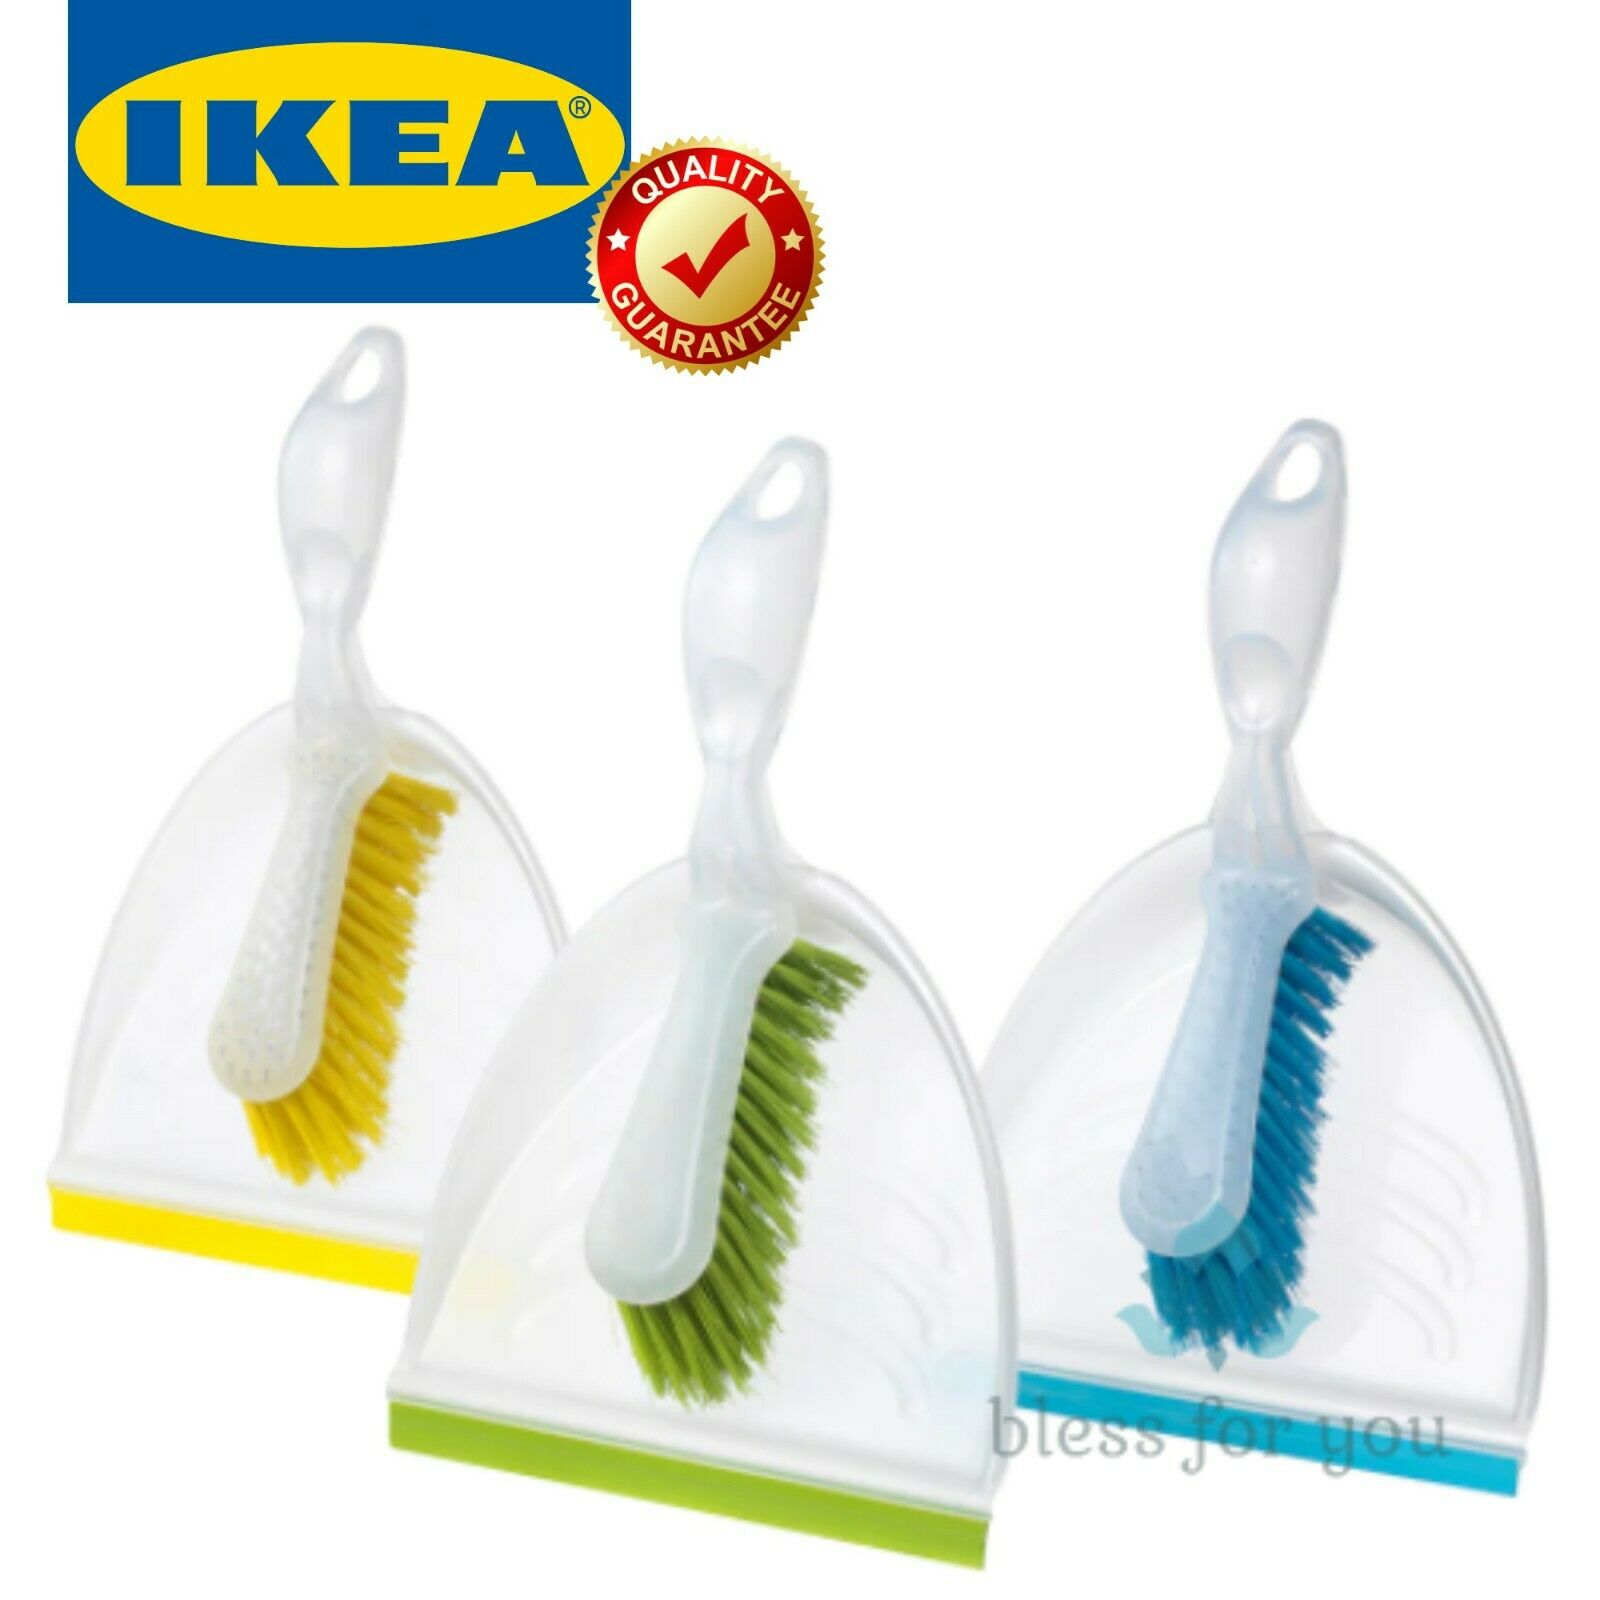 Ikea Blaska Dust Pan And Brush Assorted Colors